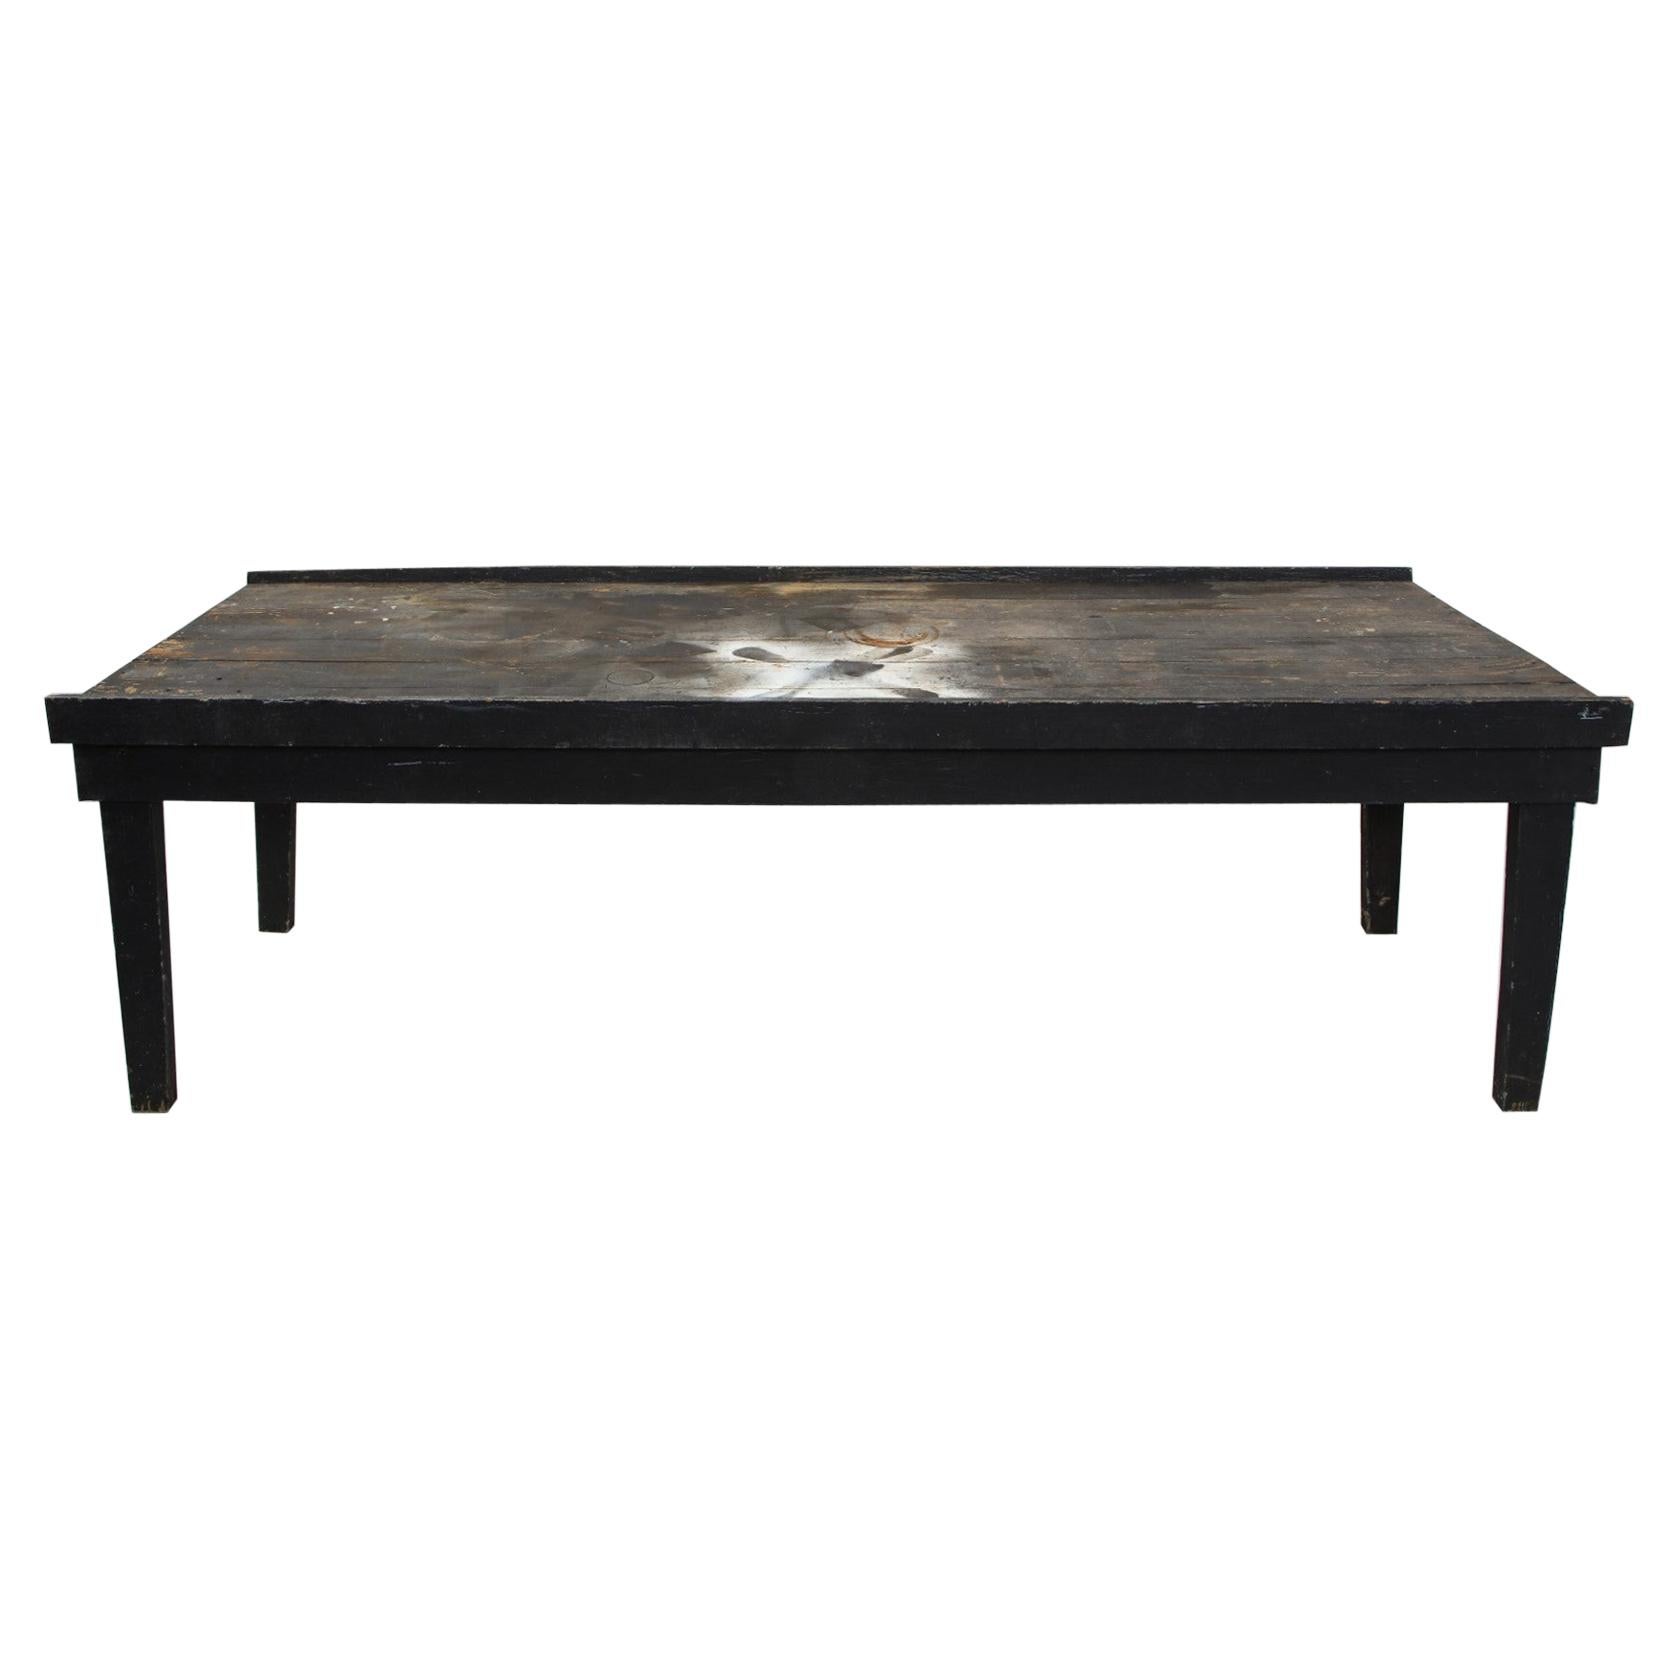 20th Century American Primitive Rustic Black Painted Oak Work Table For Sale